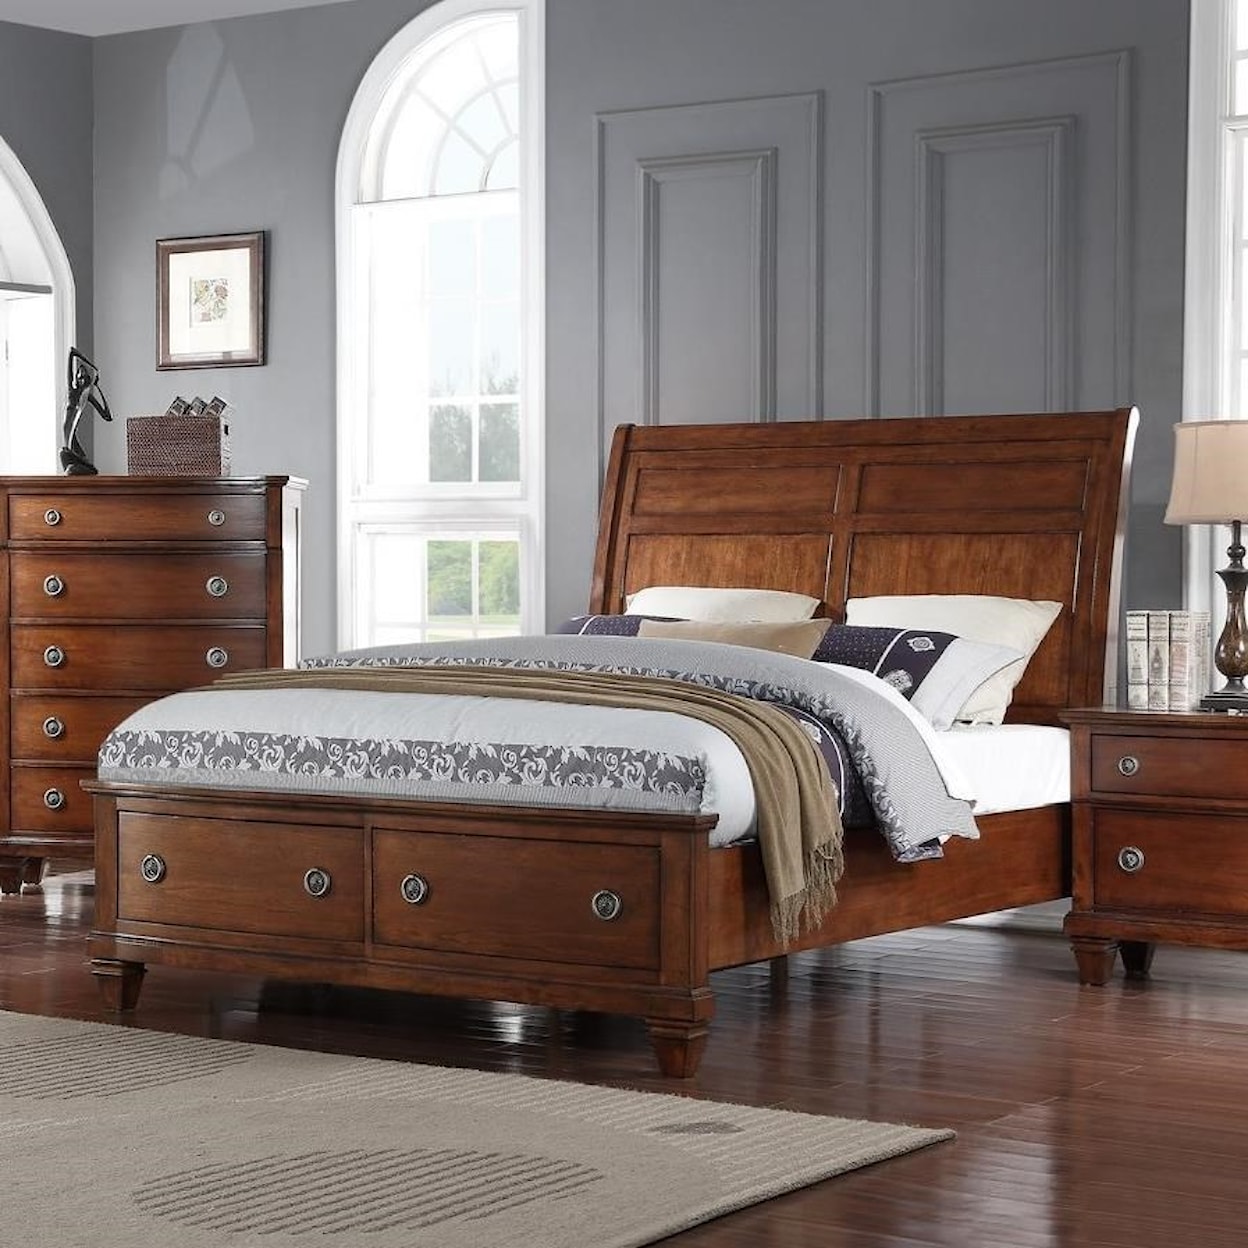 Avalon Furniture B068 Queen Storage Bed with Sleigh Headboard